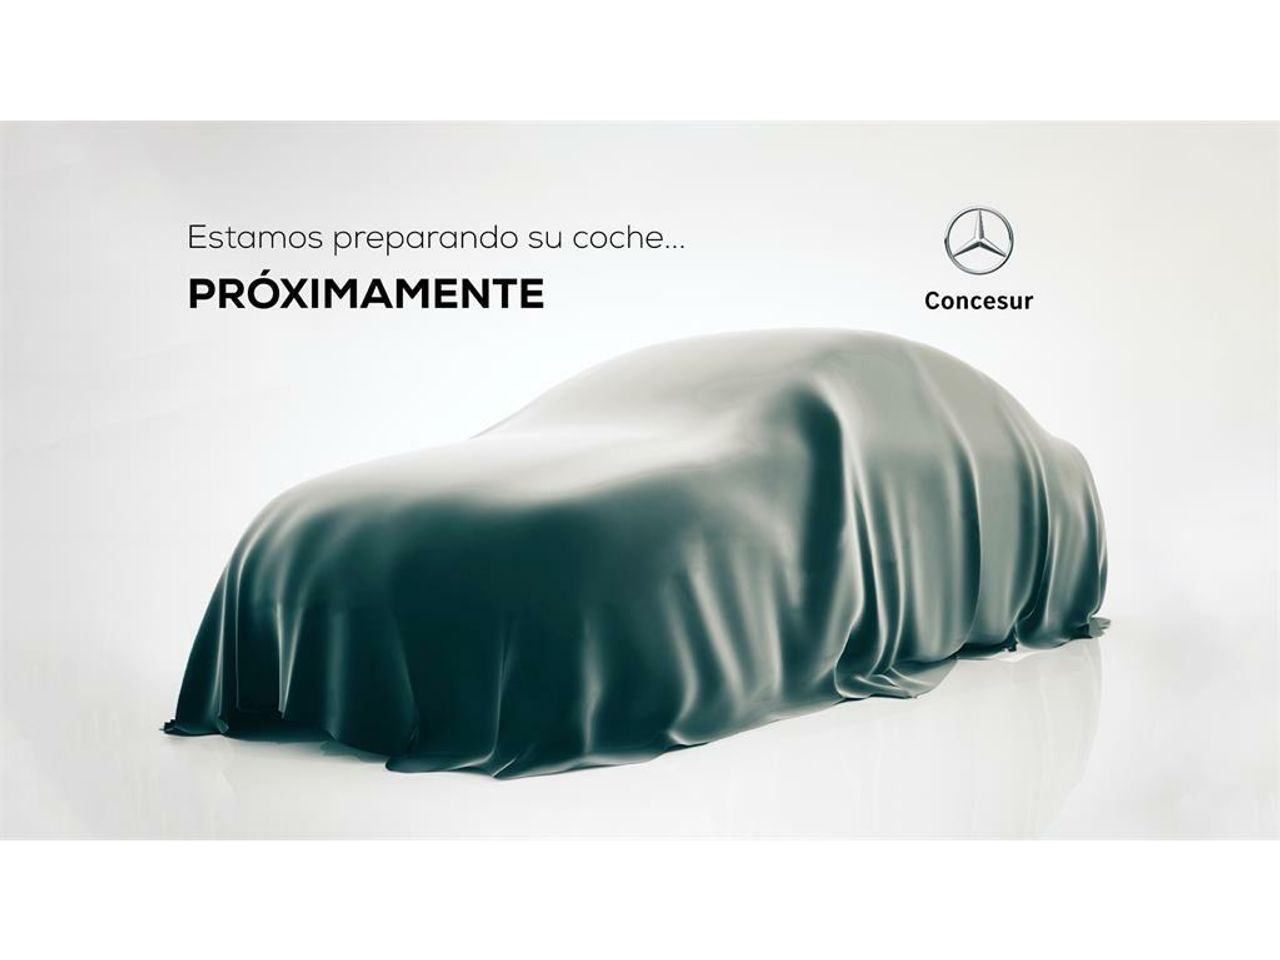 Foto Mercedes-Benz Clase GLA 5